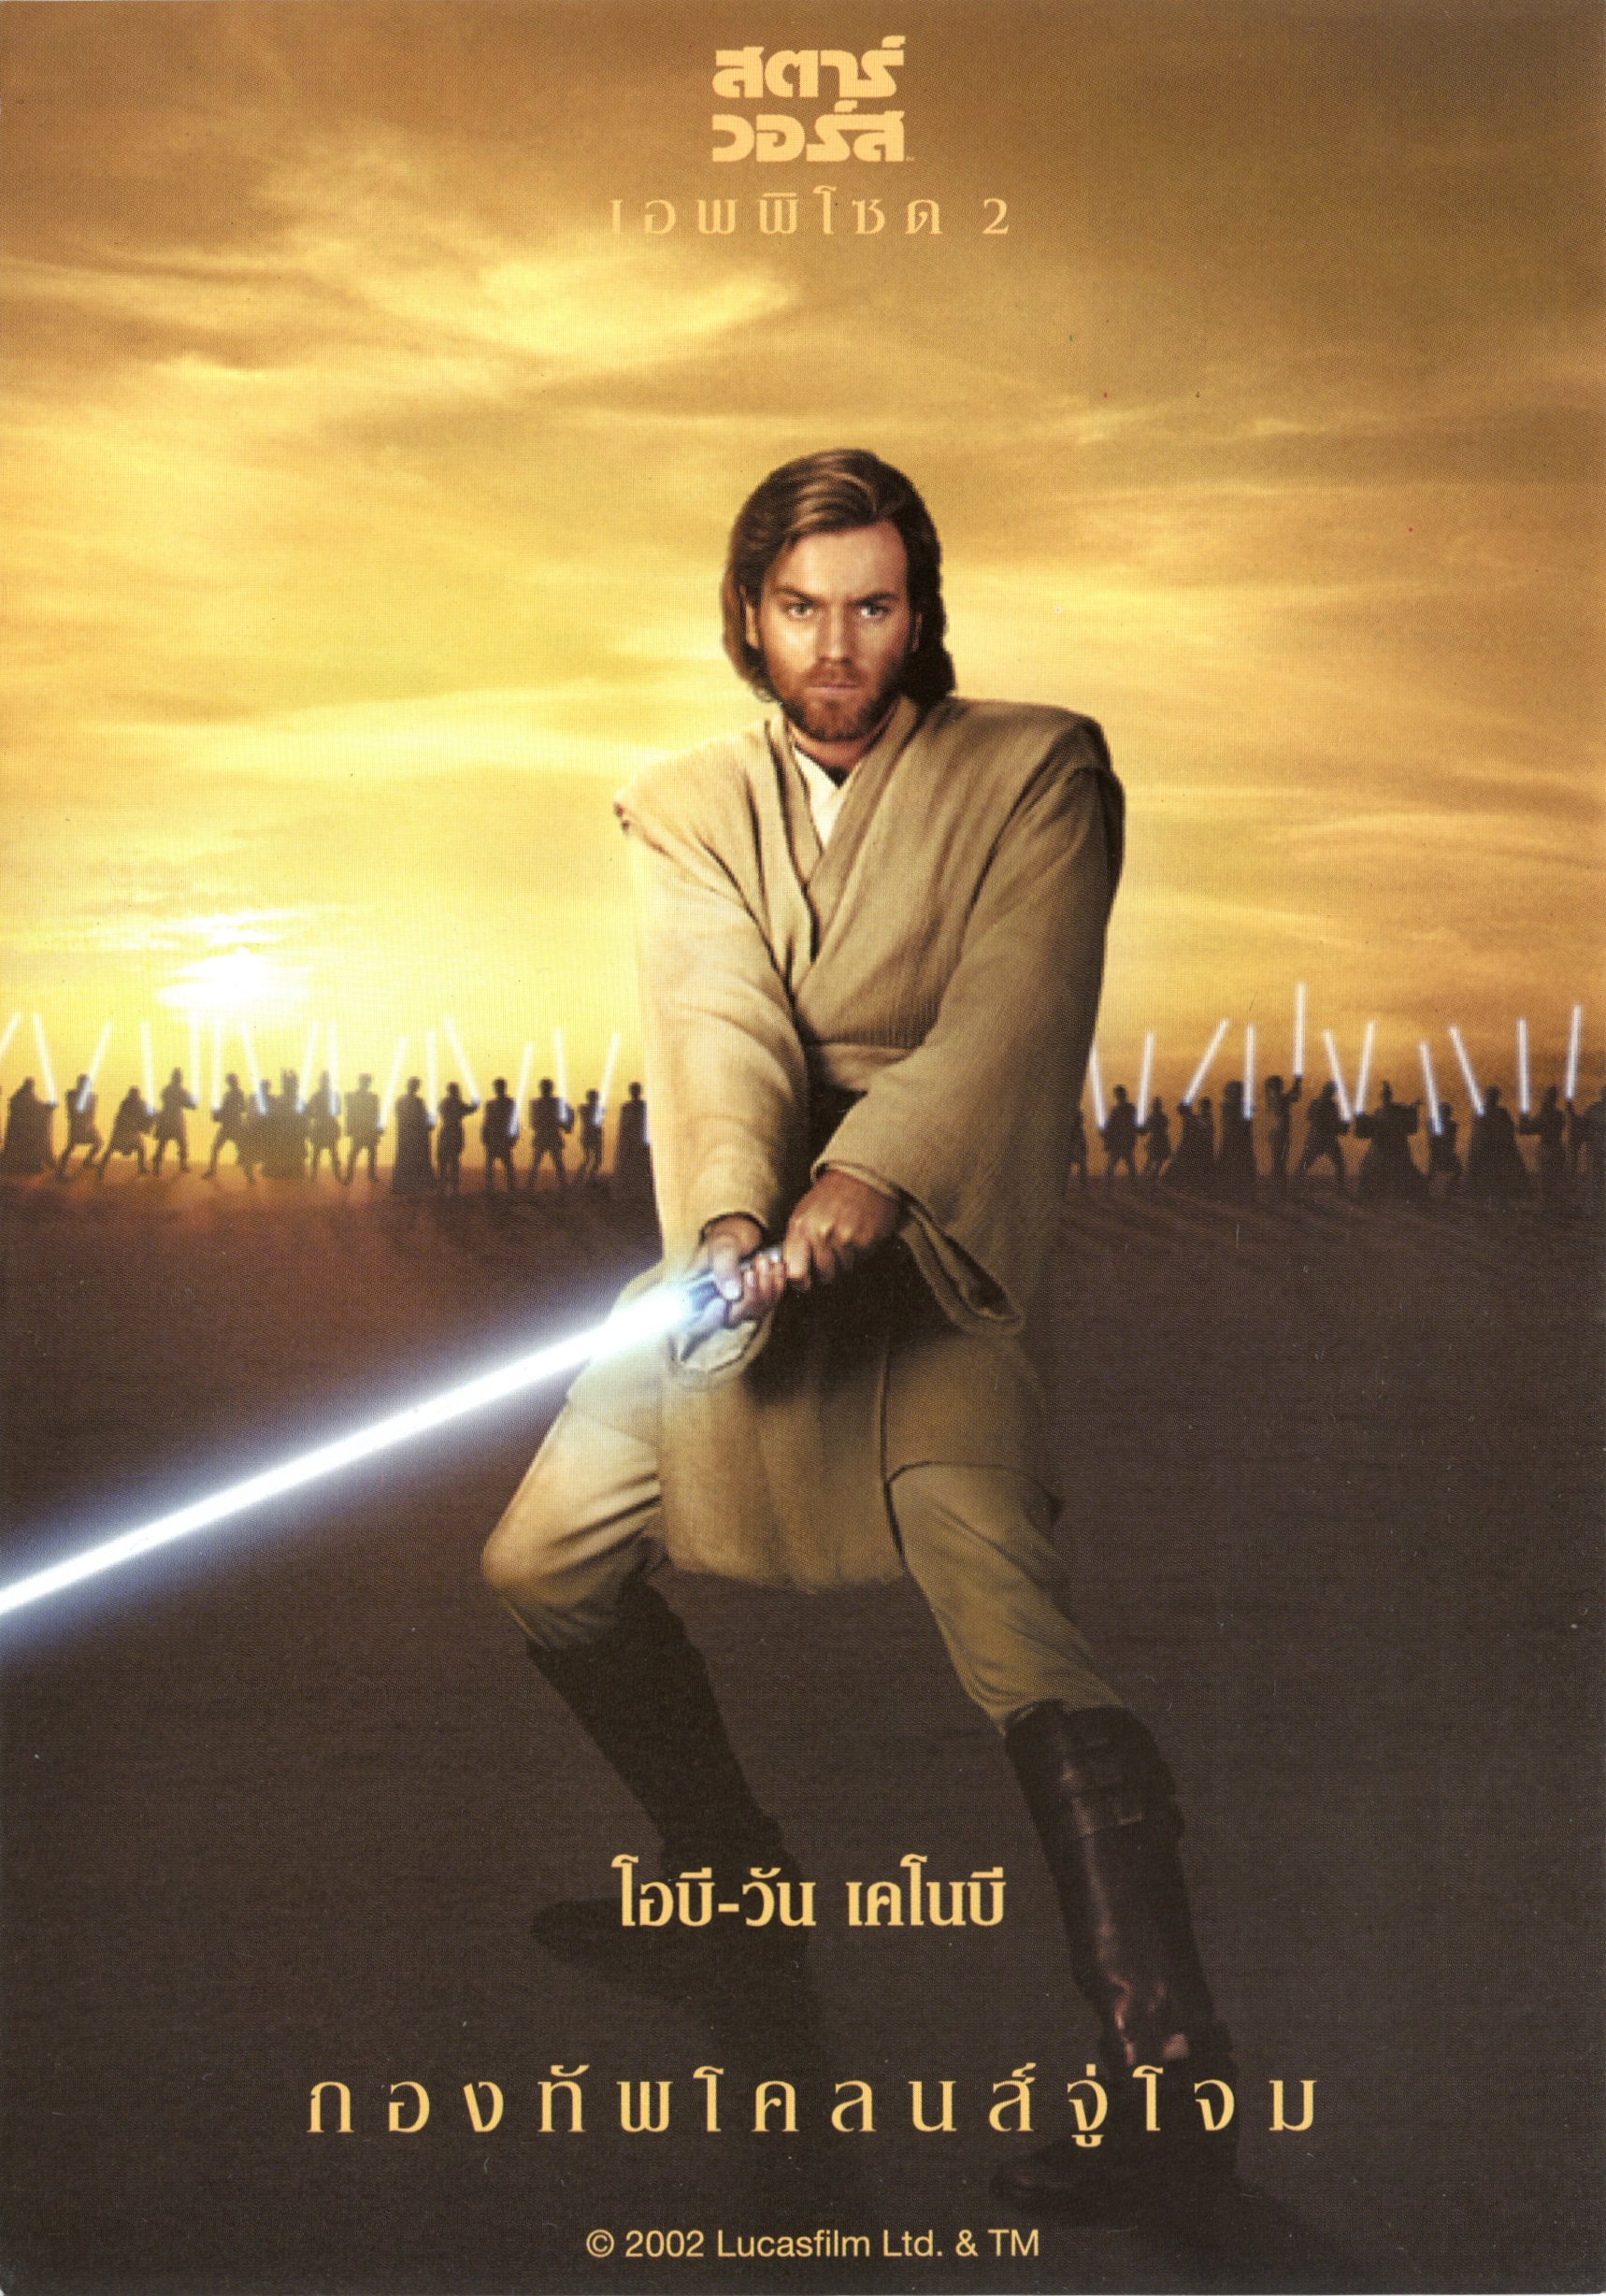 AOTC Thailand Handbill - Obi-Wan 1.jpg